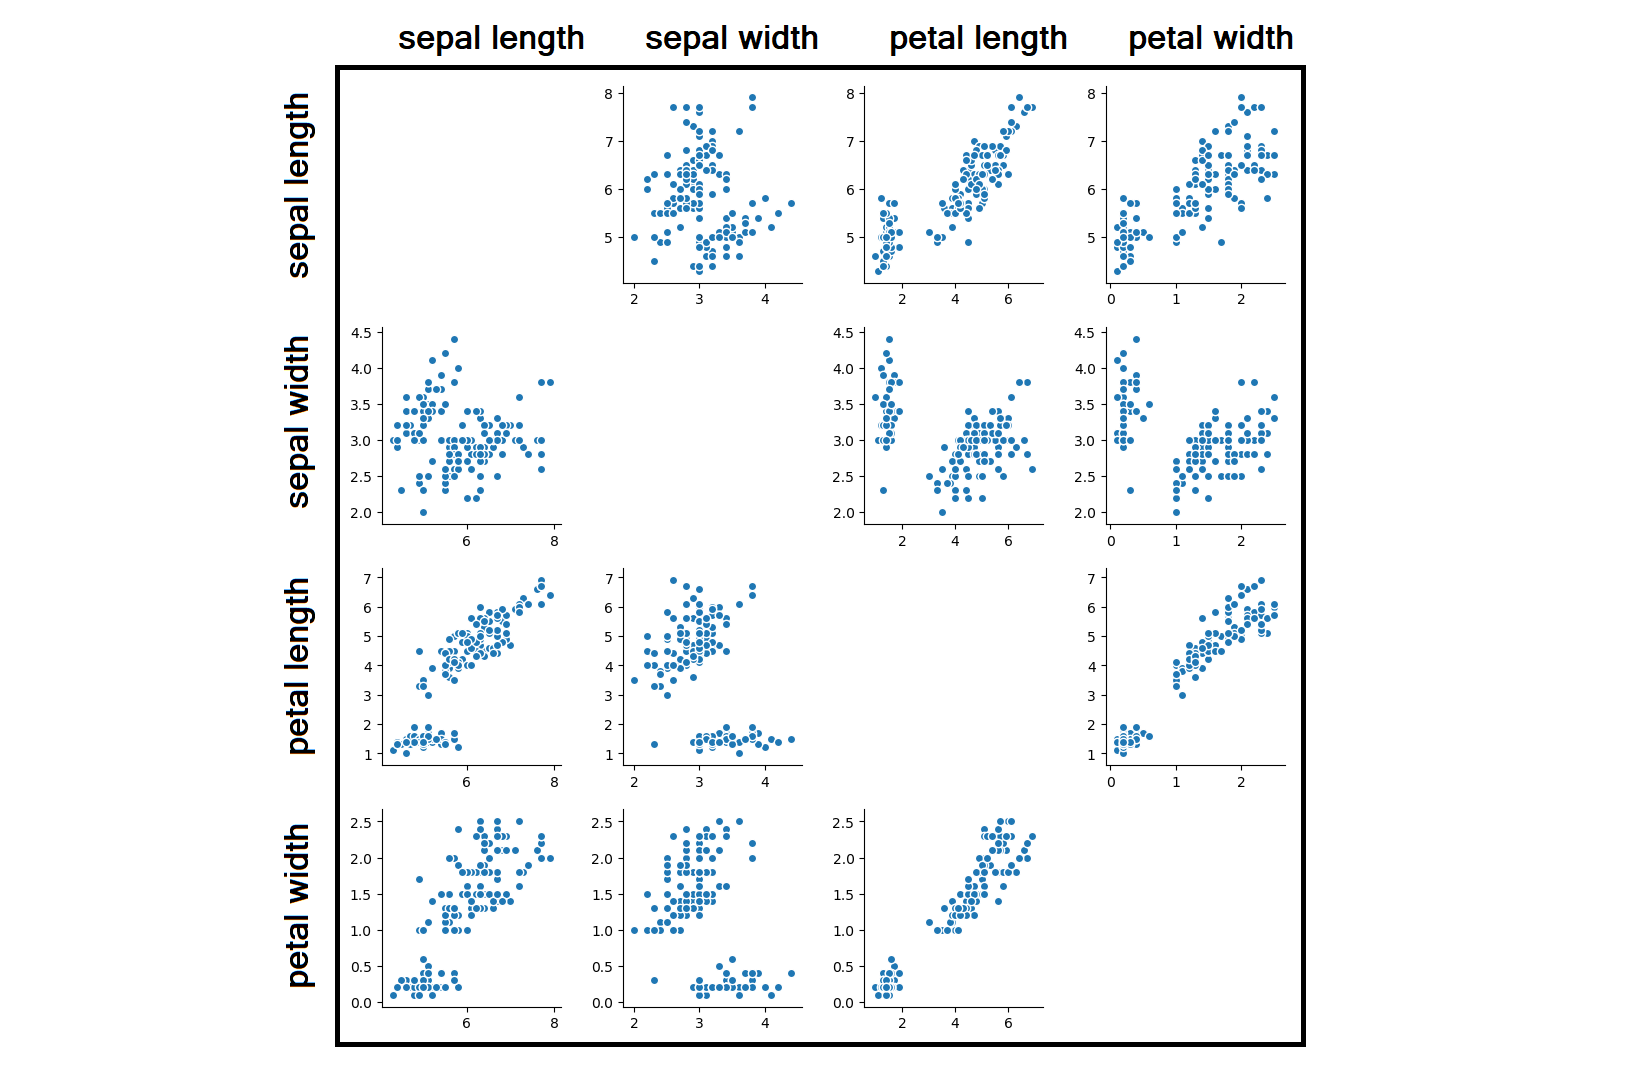 scatter plot matrix